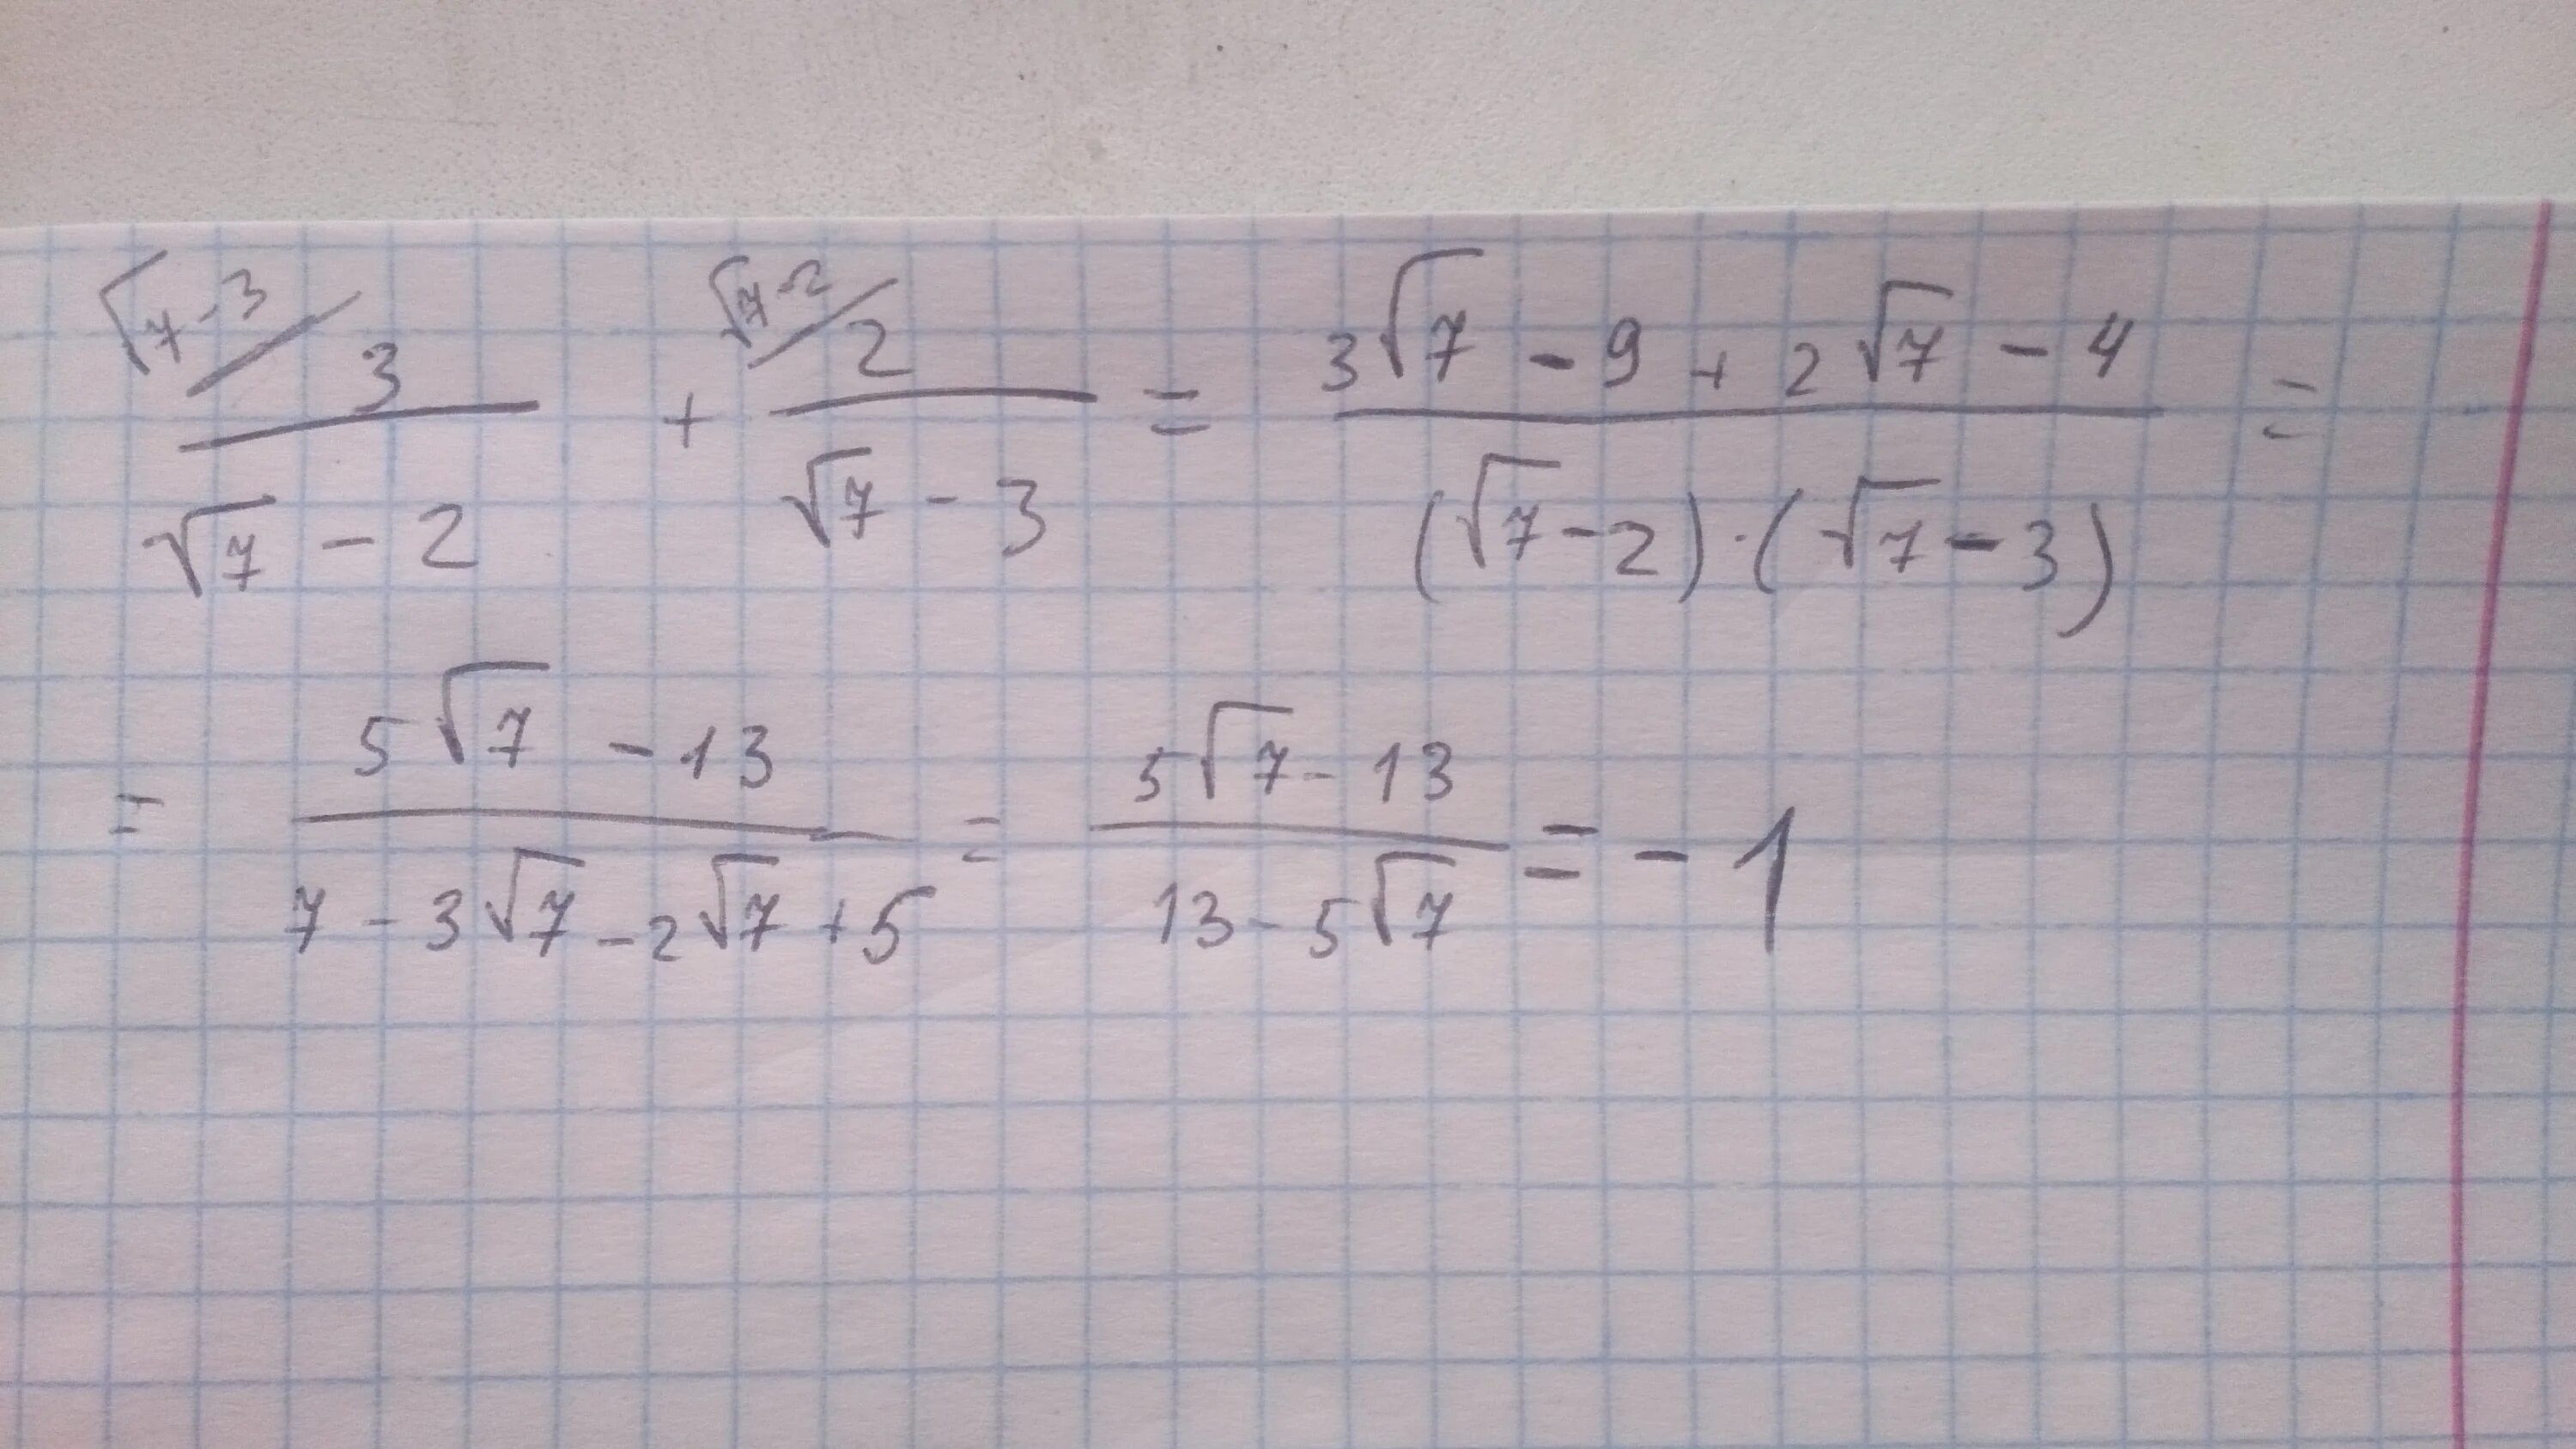 3х 7 2 упростите выражение. 2а-3+7а упростить выражение. (A-2)(A+7) упростить выражение. Упростите выражение: 3/(√7-2)+2/(√7-3). Упростить выражение (7a-3)-(-8-2a).